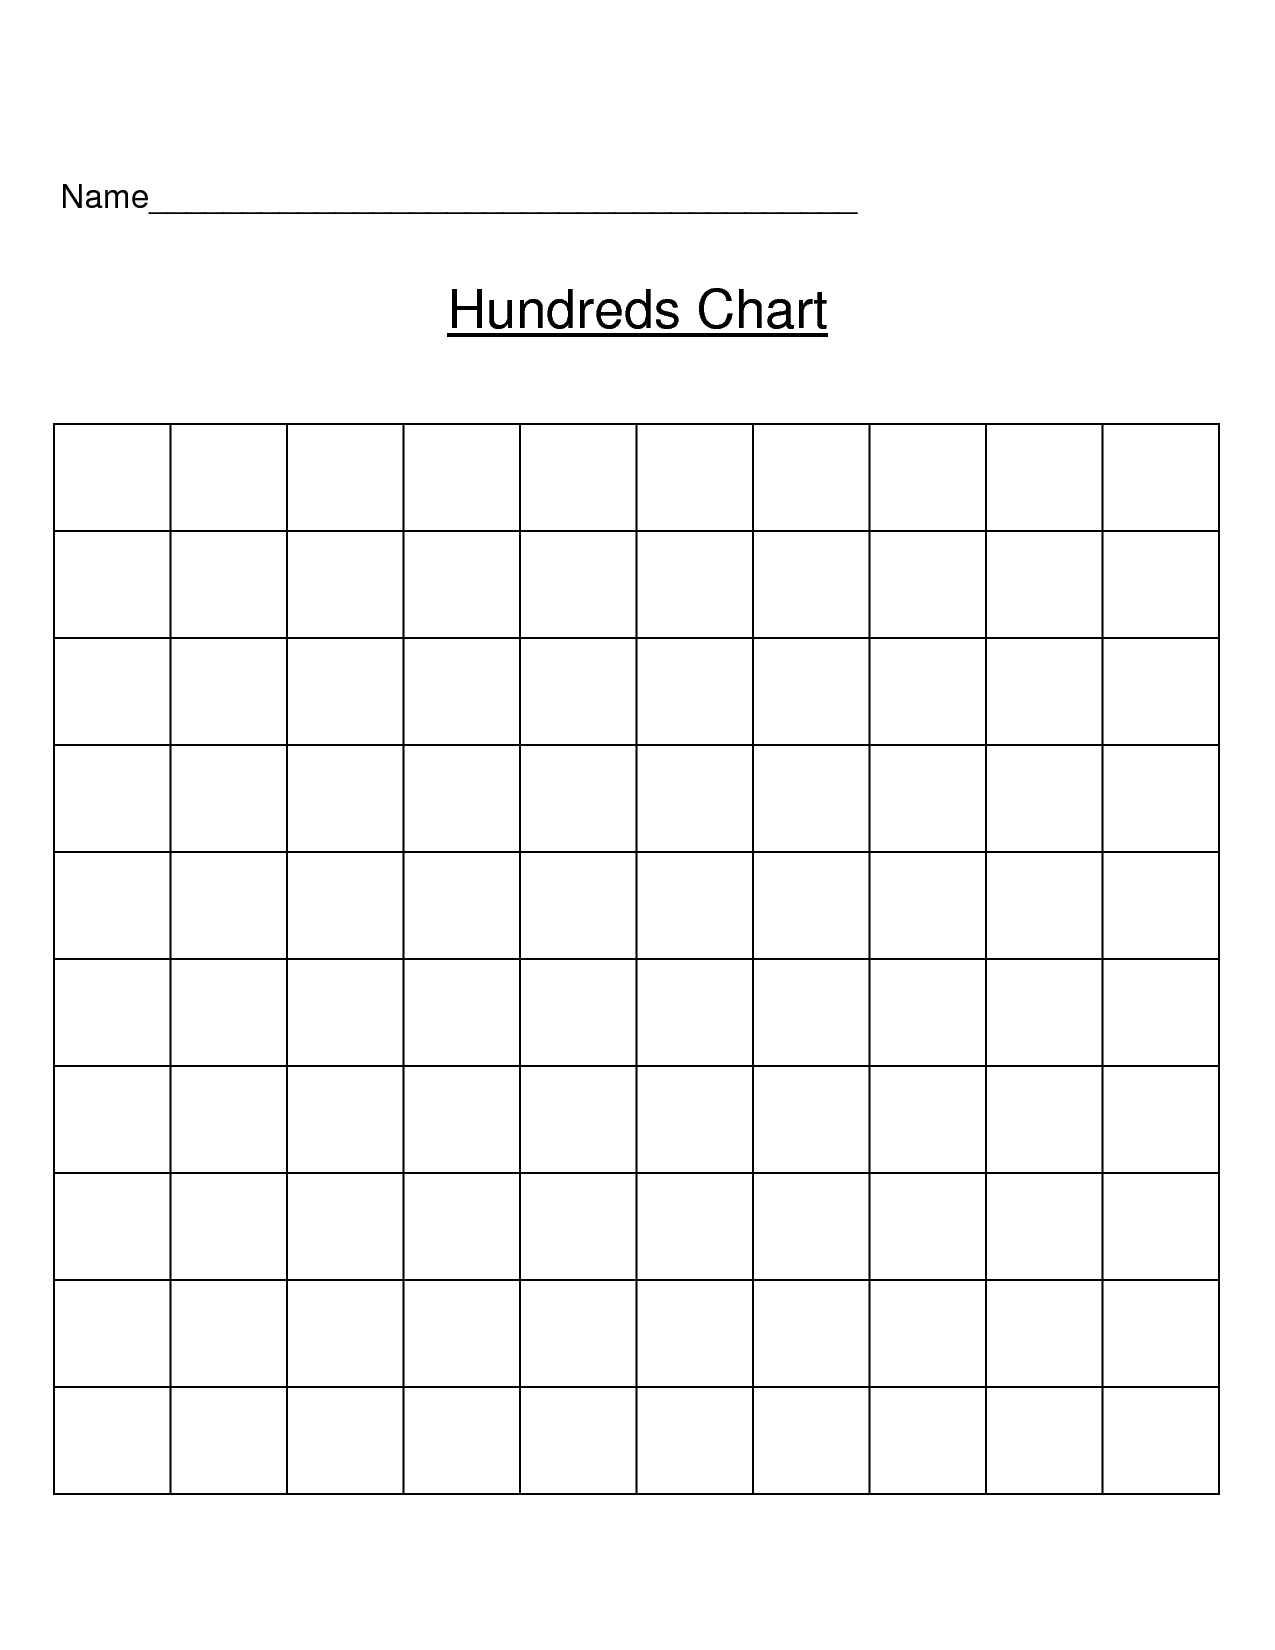 Math : Blank Hundreds Chart Blank Hundreds Chart Grid. Blank - Free Printable Blank 1 120 Chart